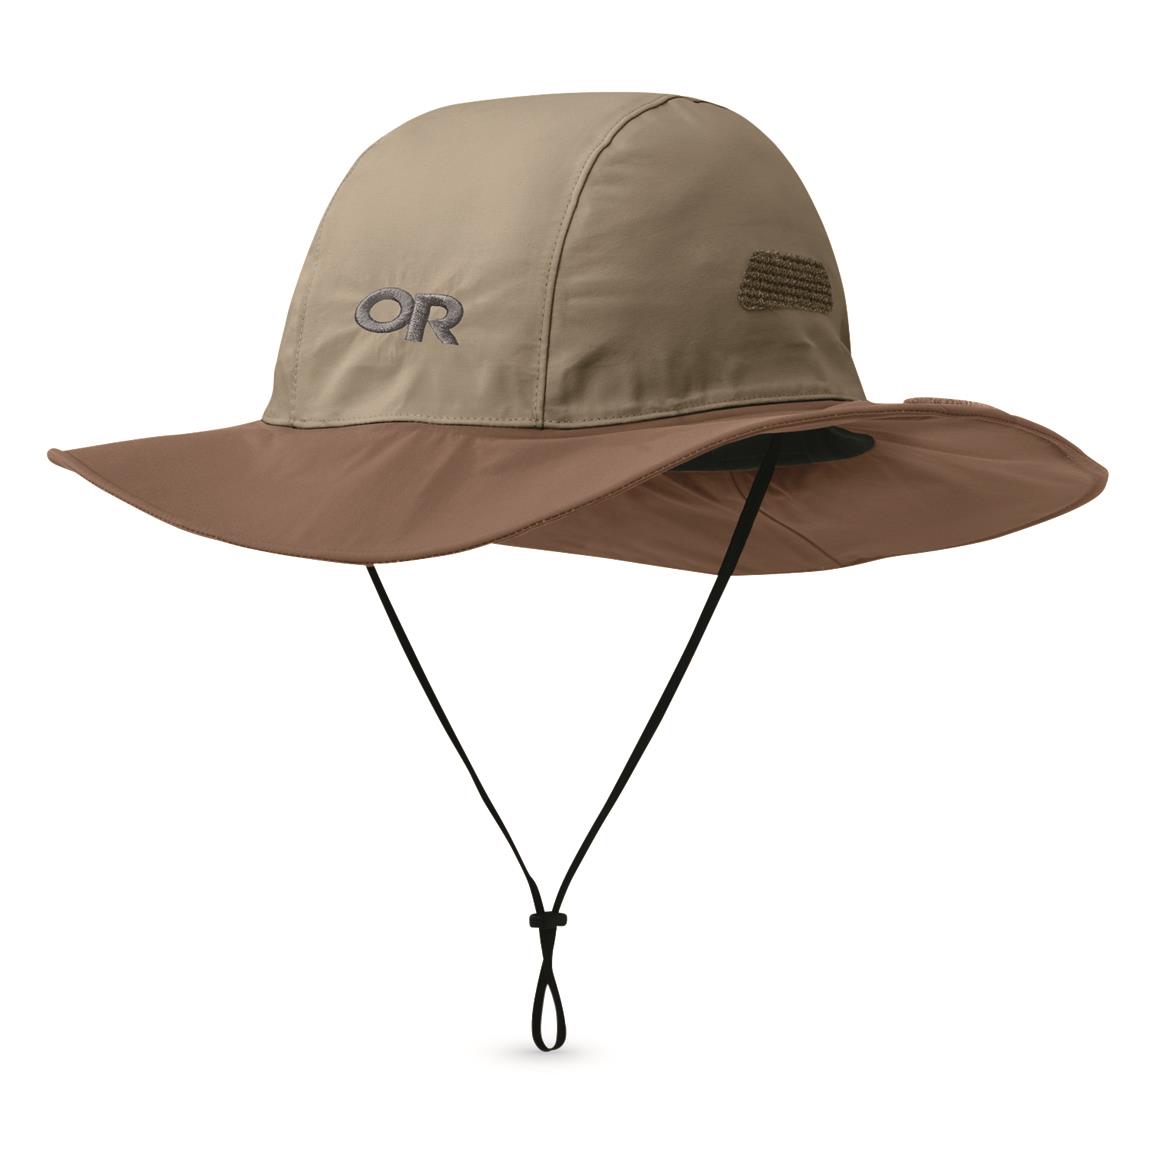 Outdoor Research Seattle Sombrero Waterproof Rain Hat, Khaki/Java